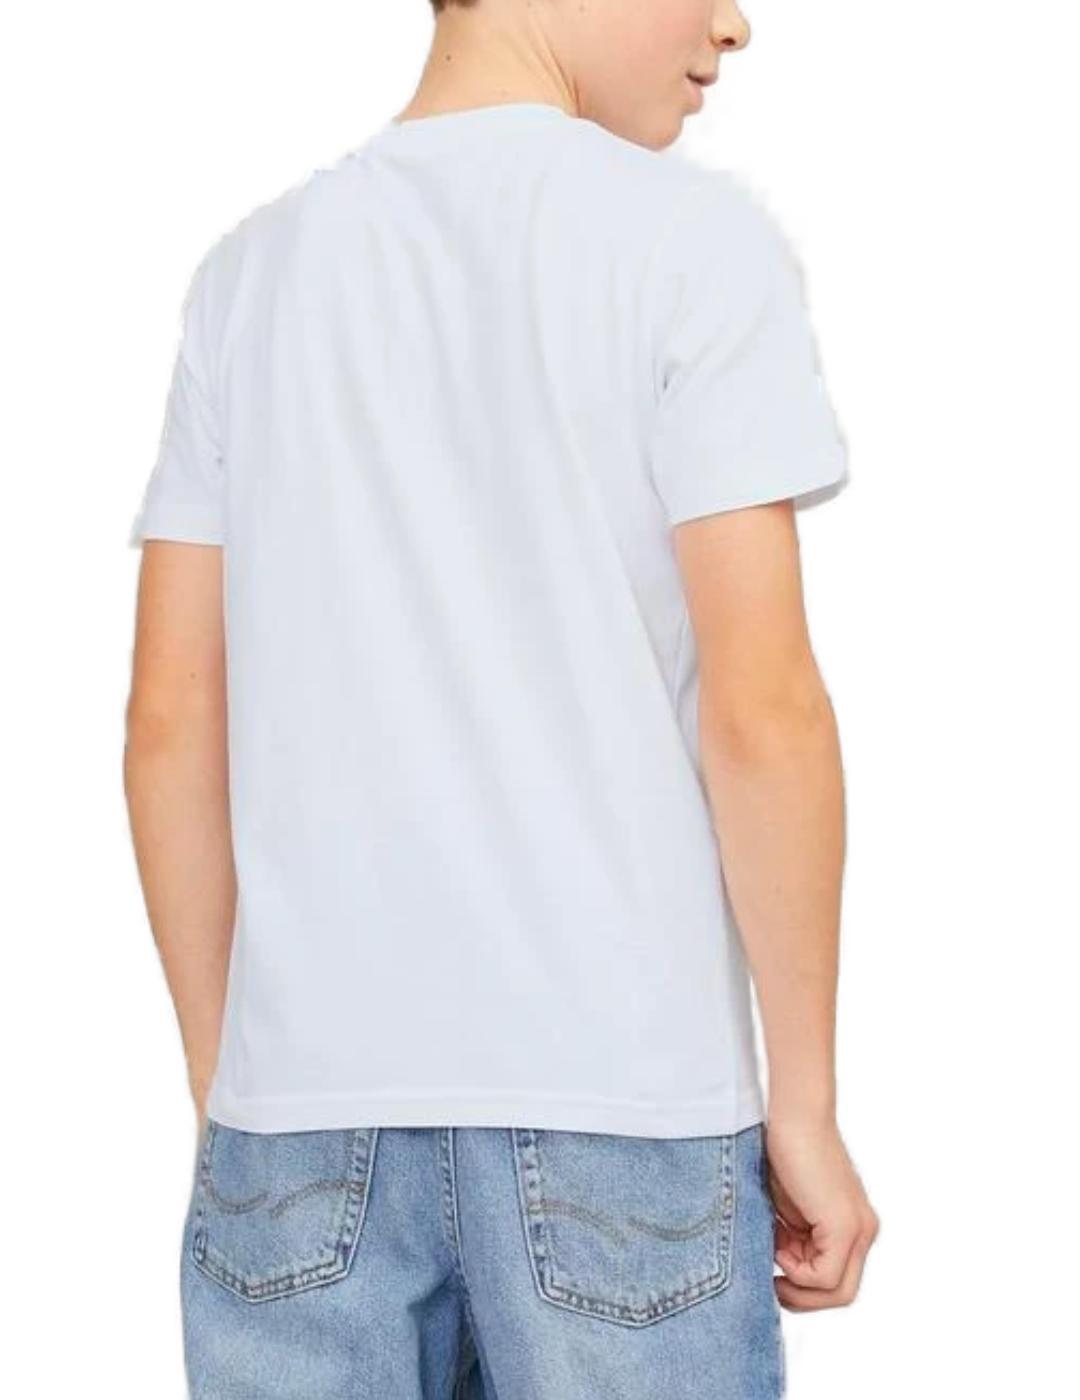 Camiseta Jack&Jones Junior blanca manga corta para niño